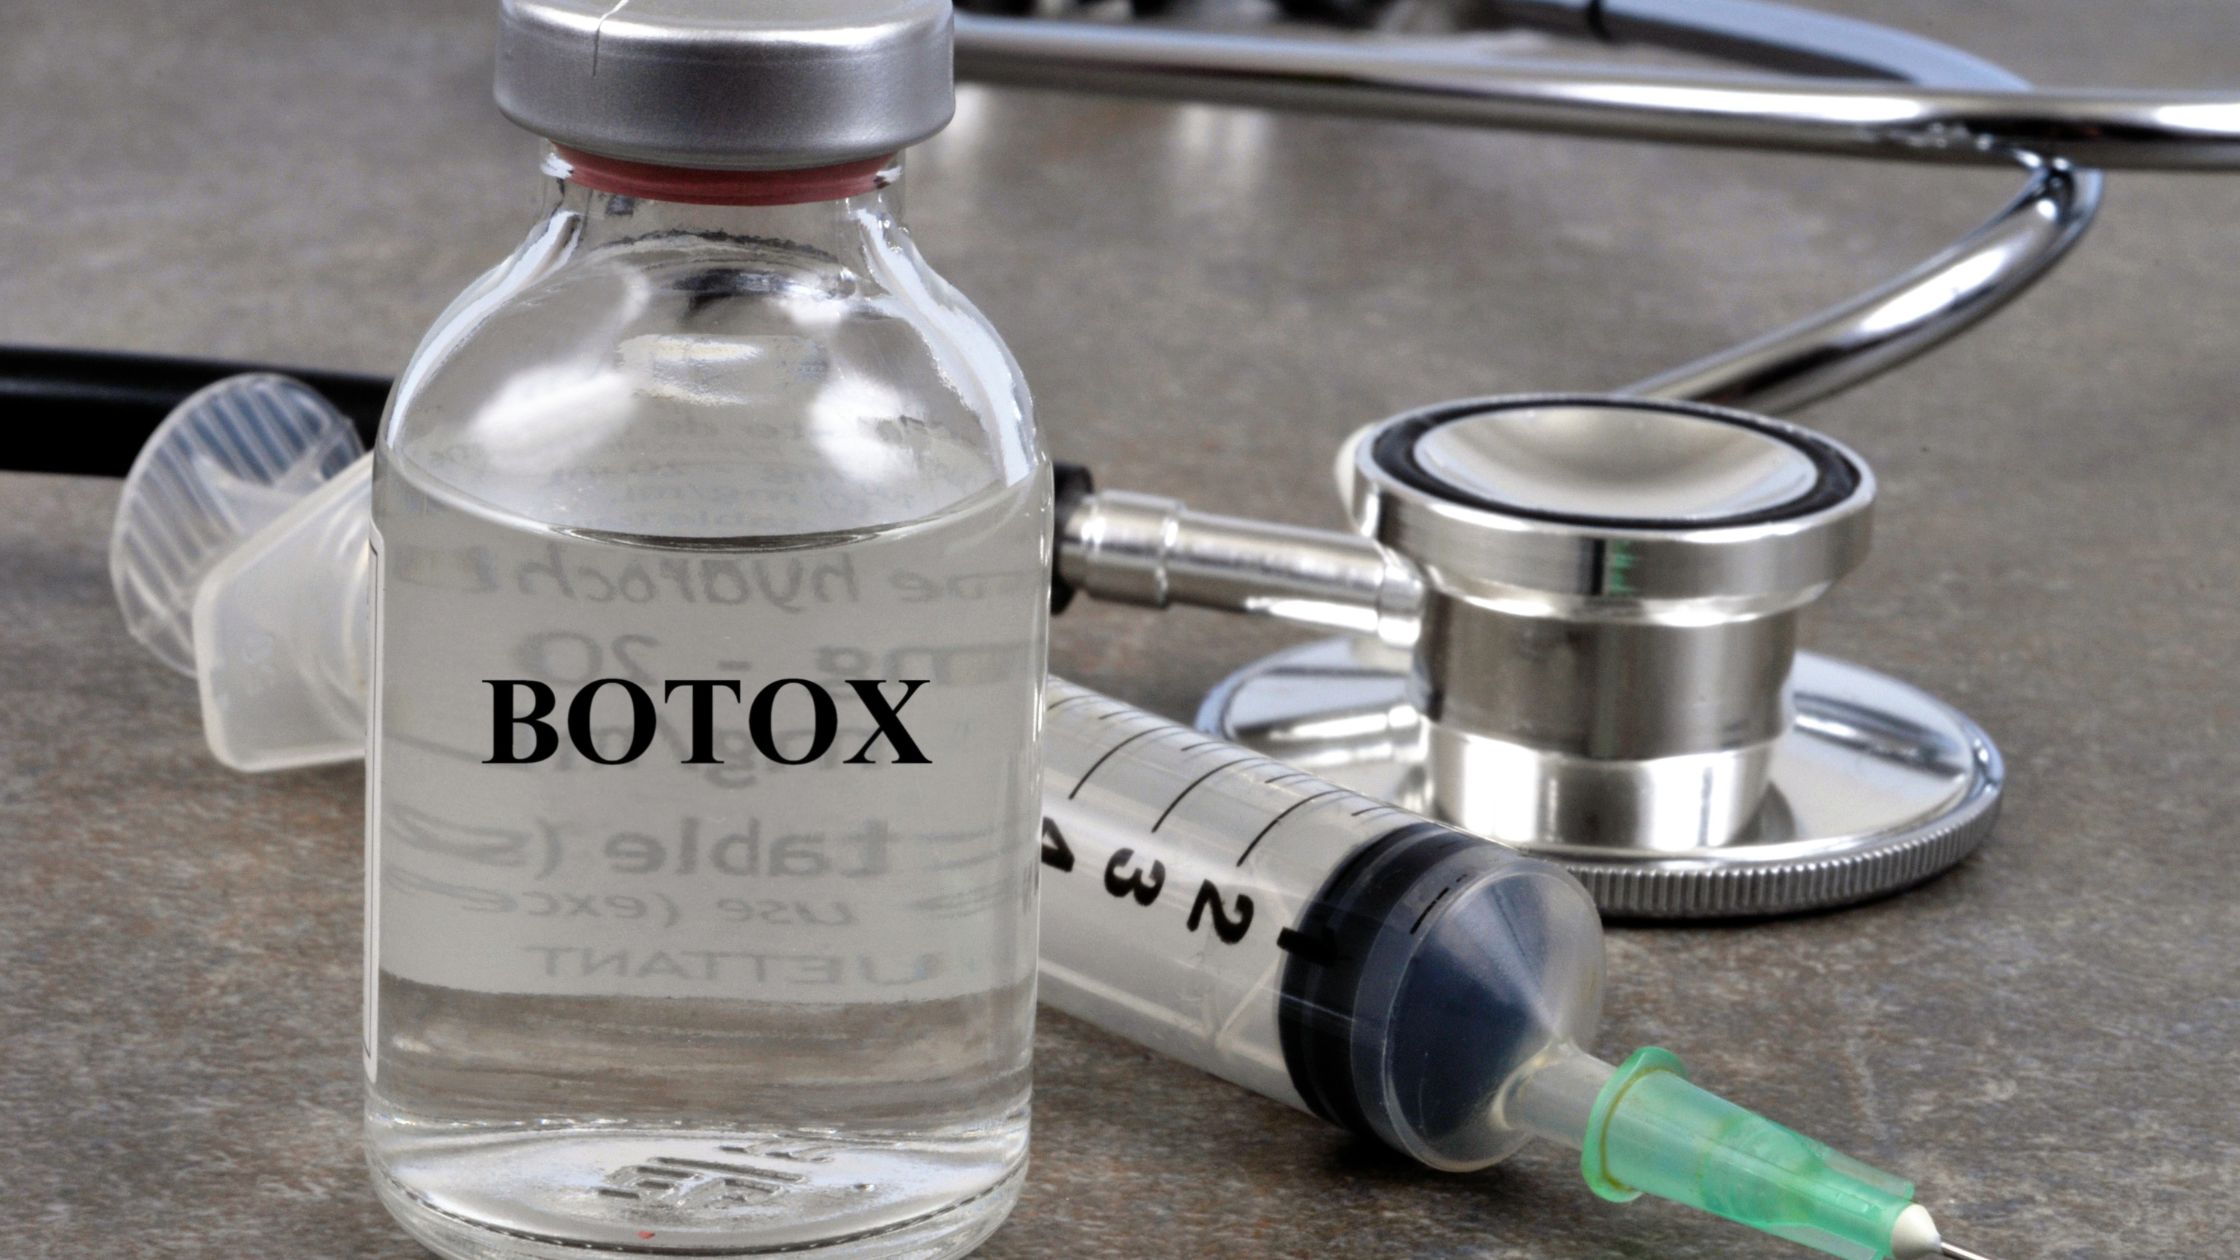 Botox and bladder urgency